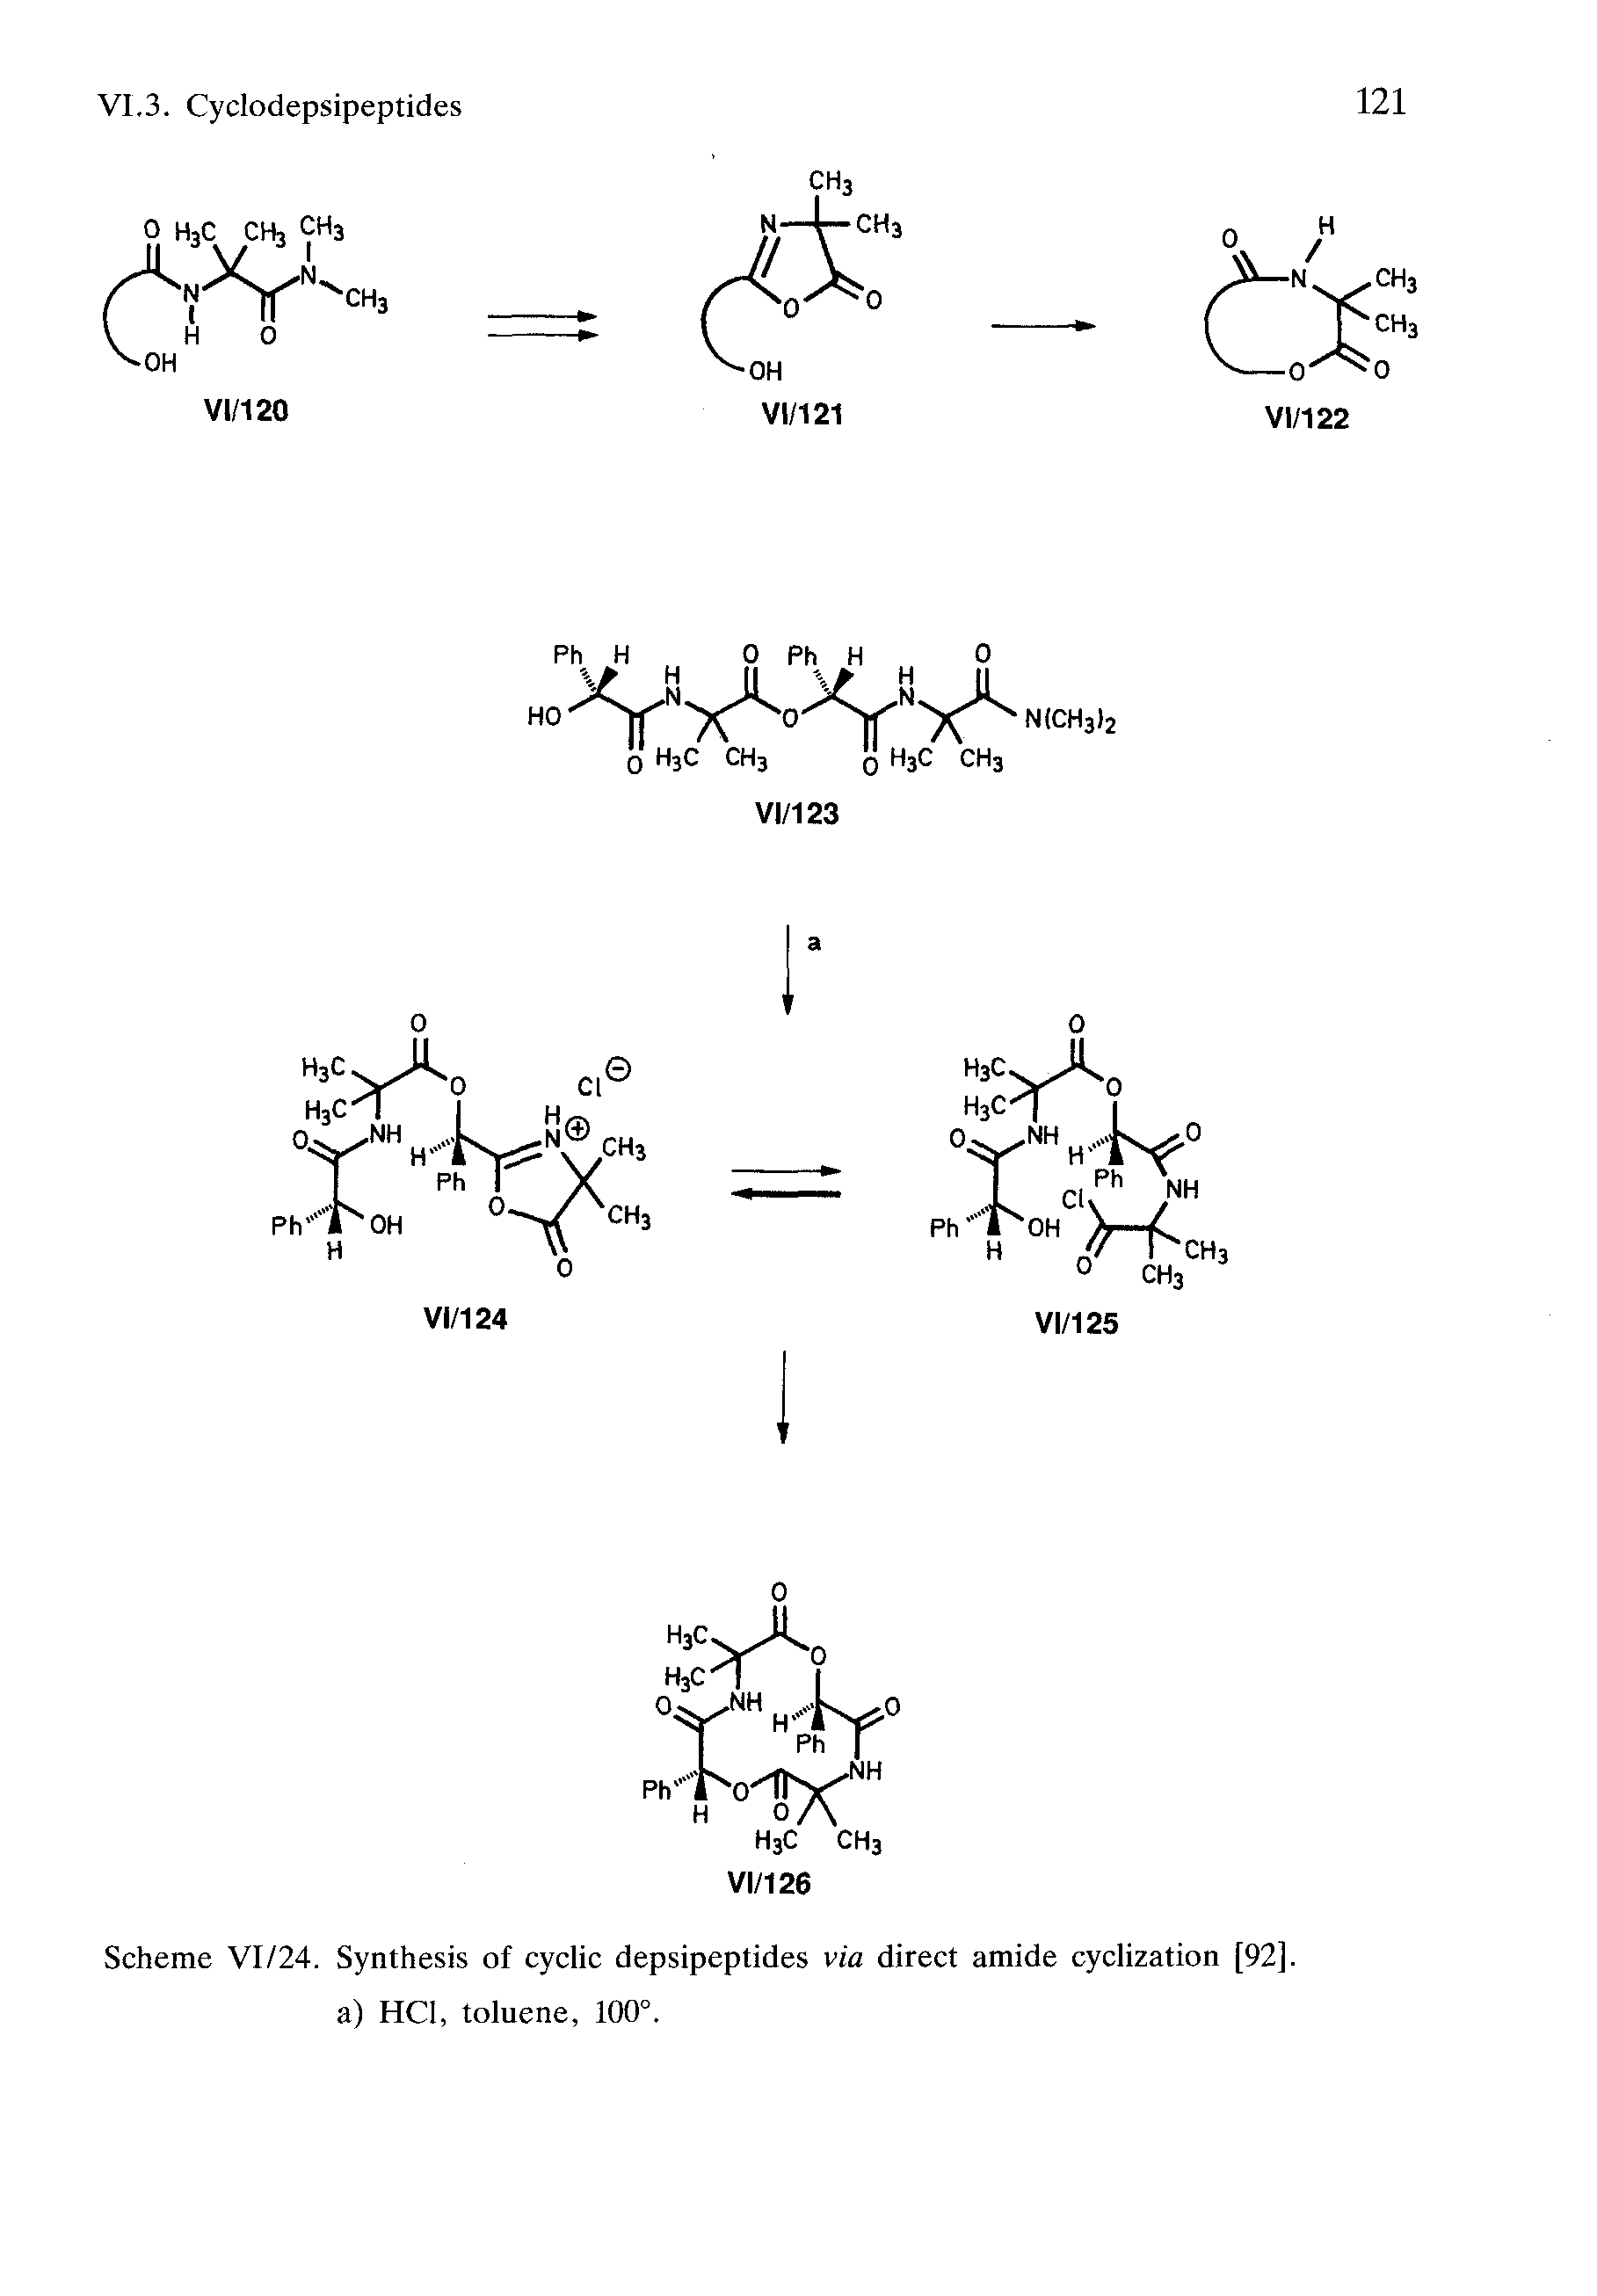 Scheme VI/24. Synthesis of cyclic depsipeptides via direct amide cyclization [92]. a) HCI, toluene, 100°.